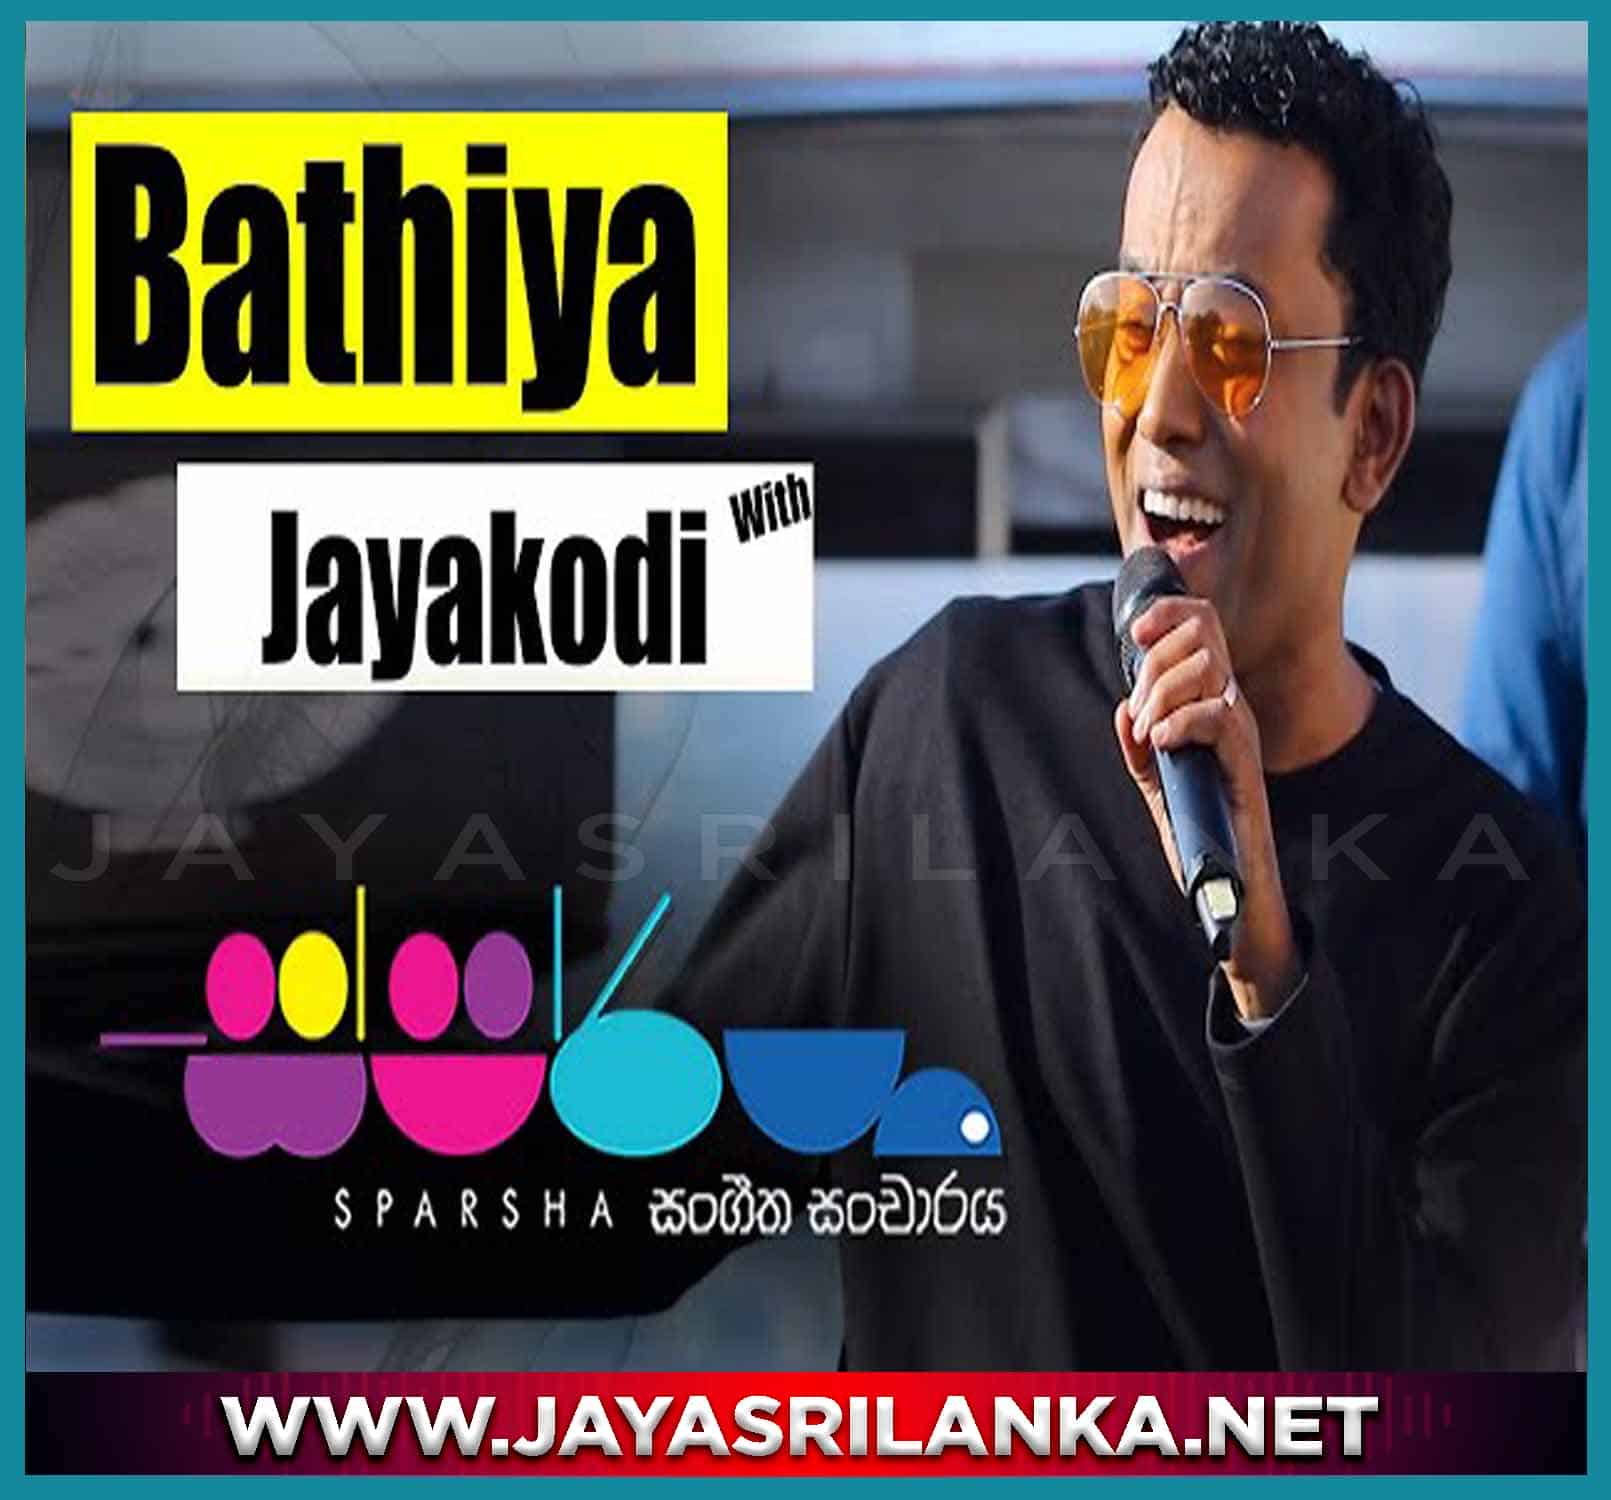 07 - Arunodaya Wage (Sparsha) - Bathiya Jayakody mp3 Image